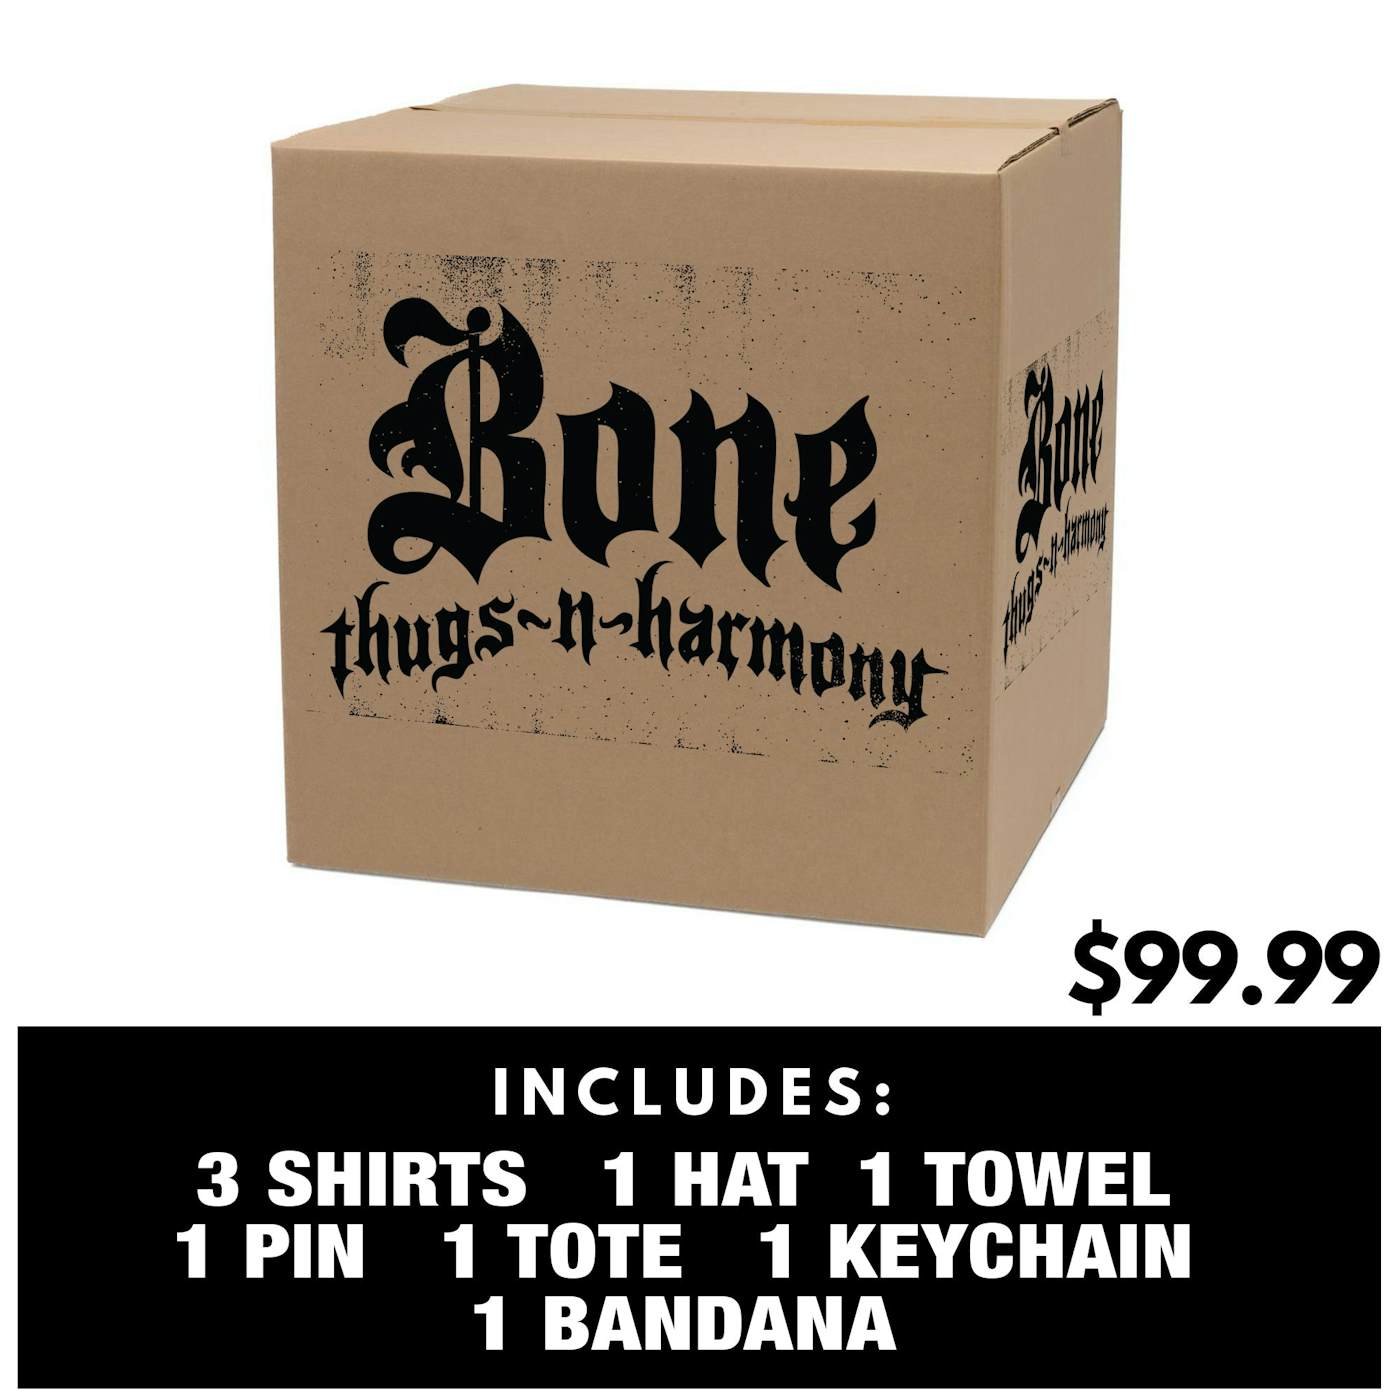  Bone Thugs-N-Harmony Mystery Box